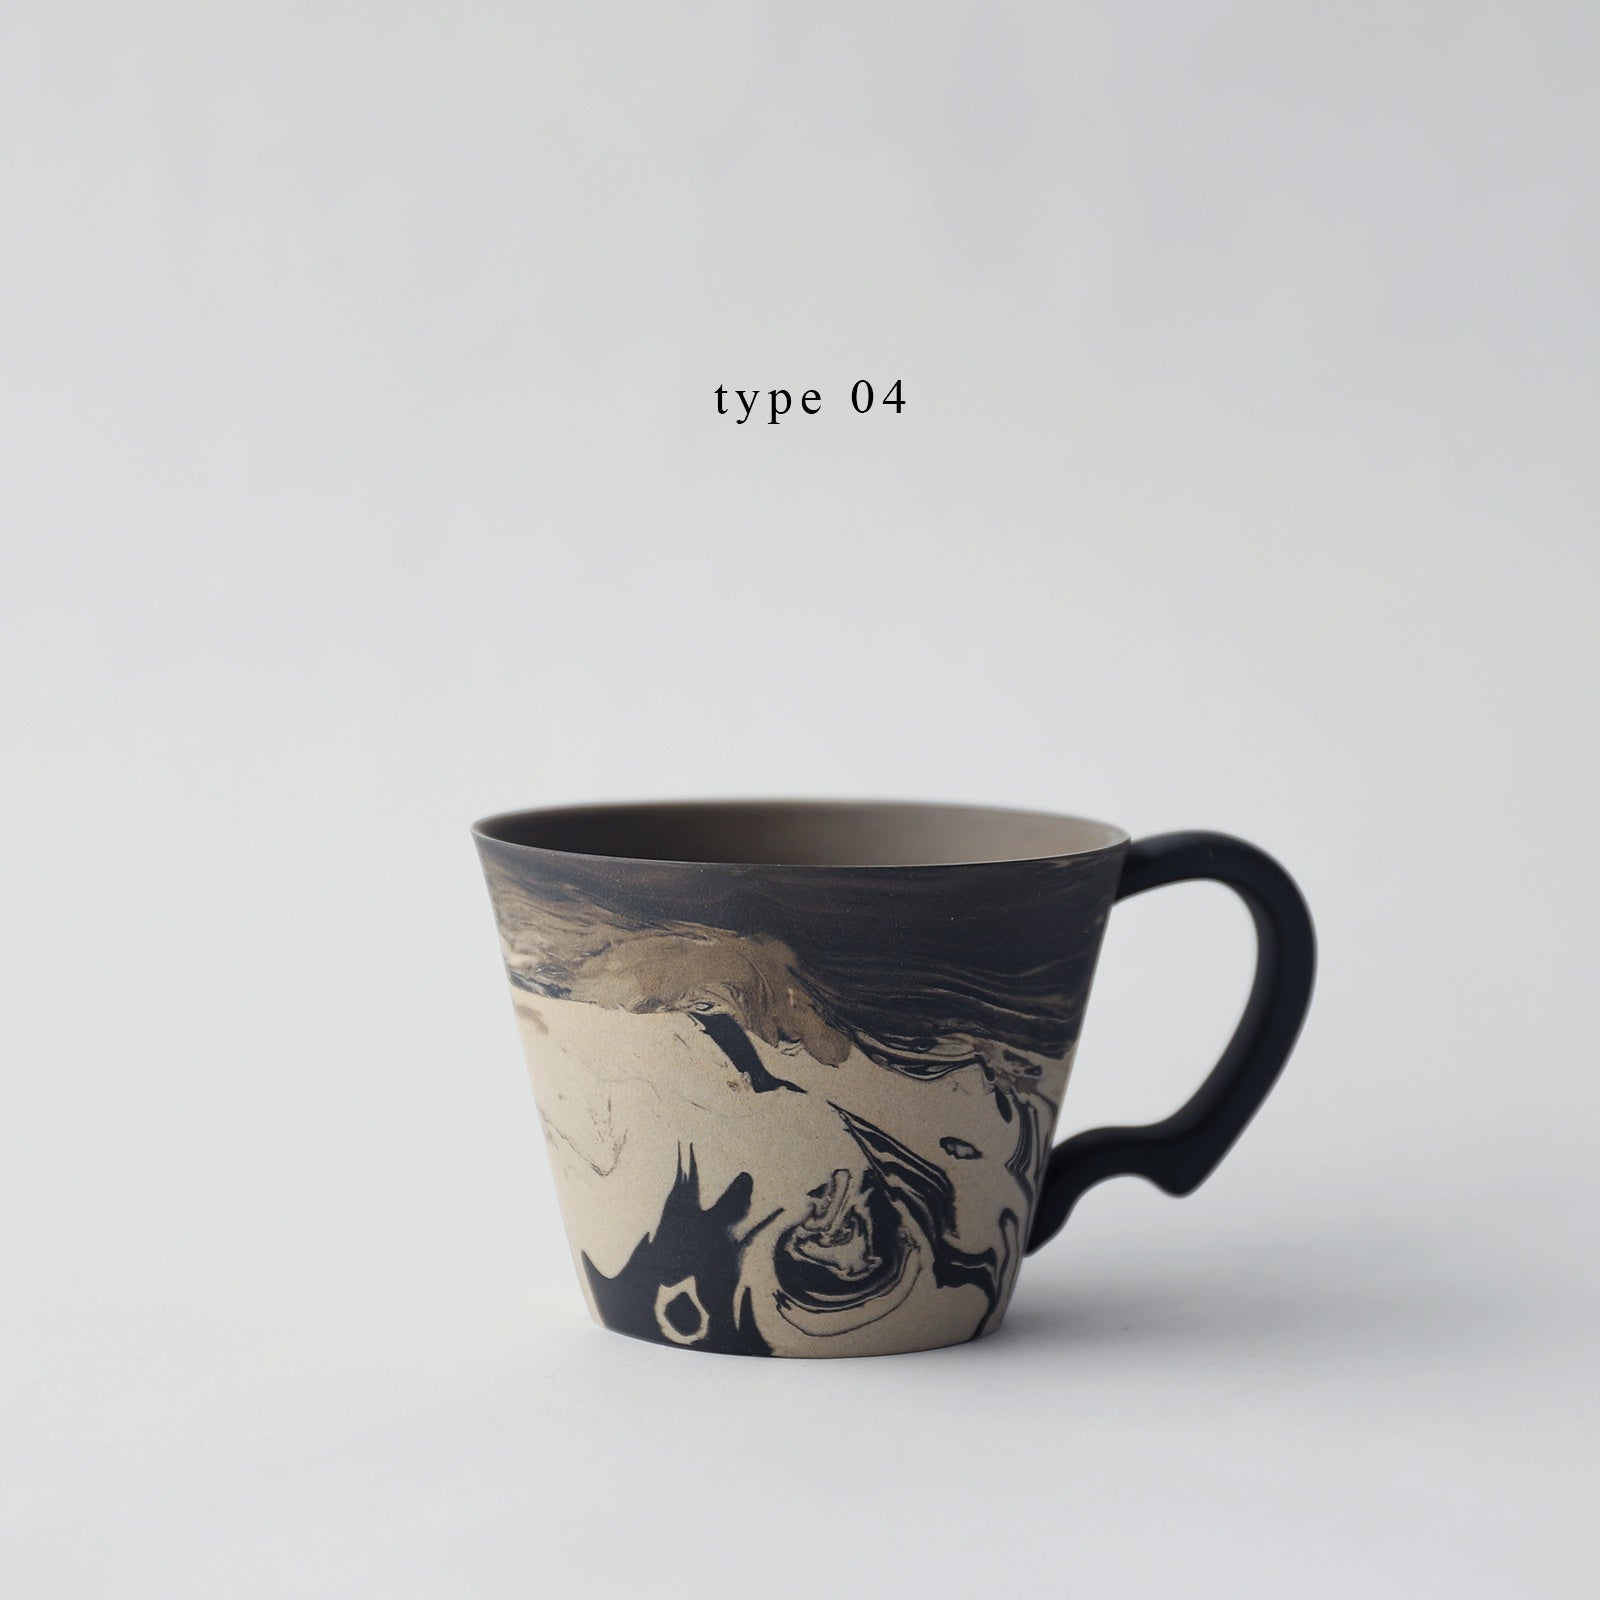 tea cup - black